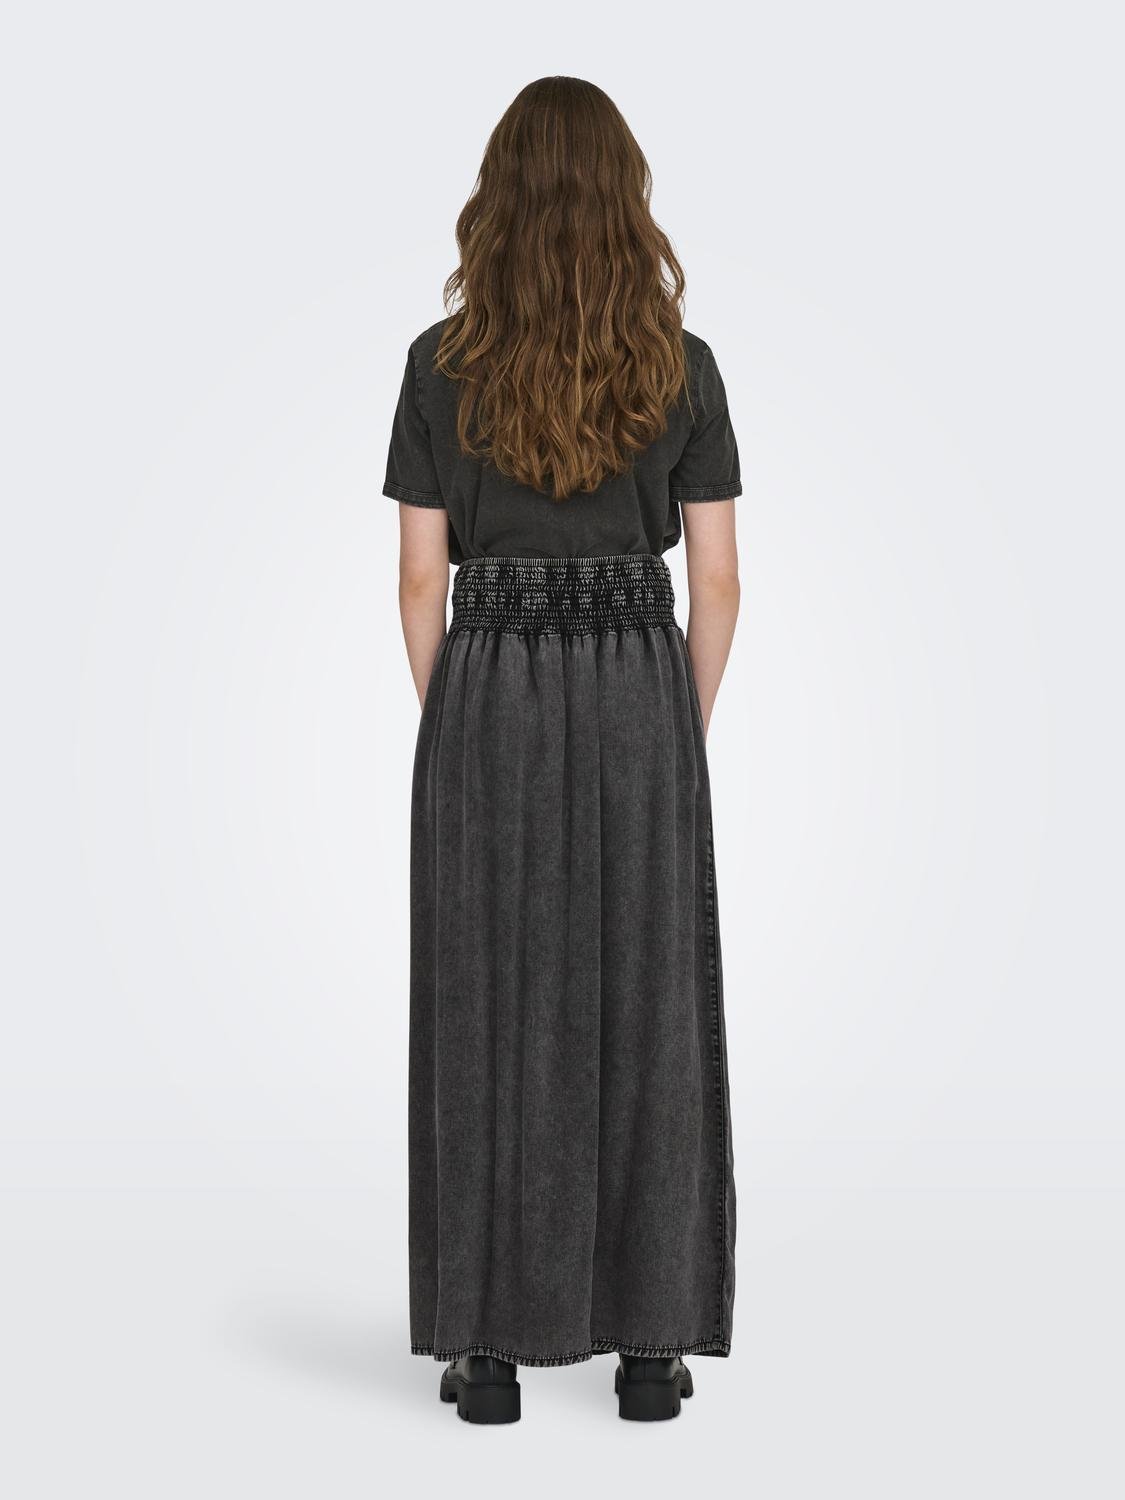 Only - Washed Black Denim Maxi Skirt